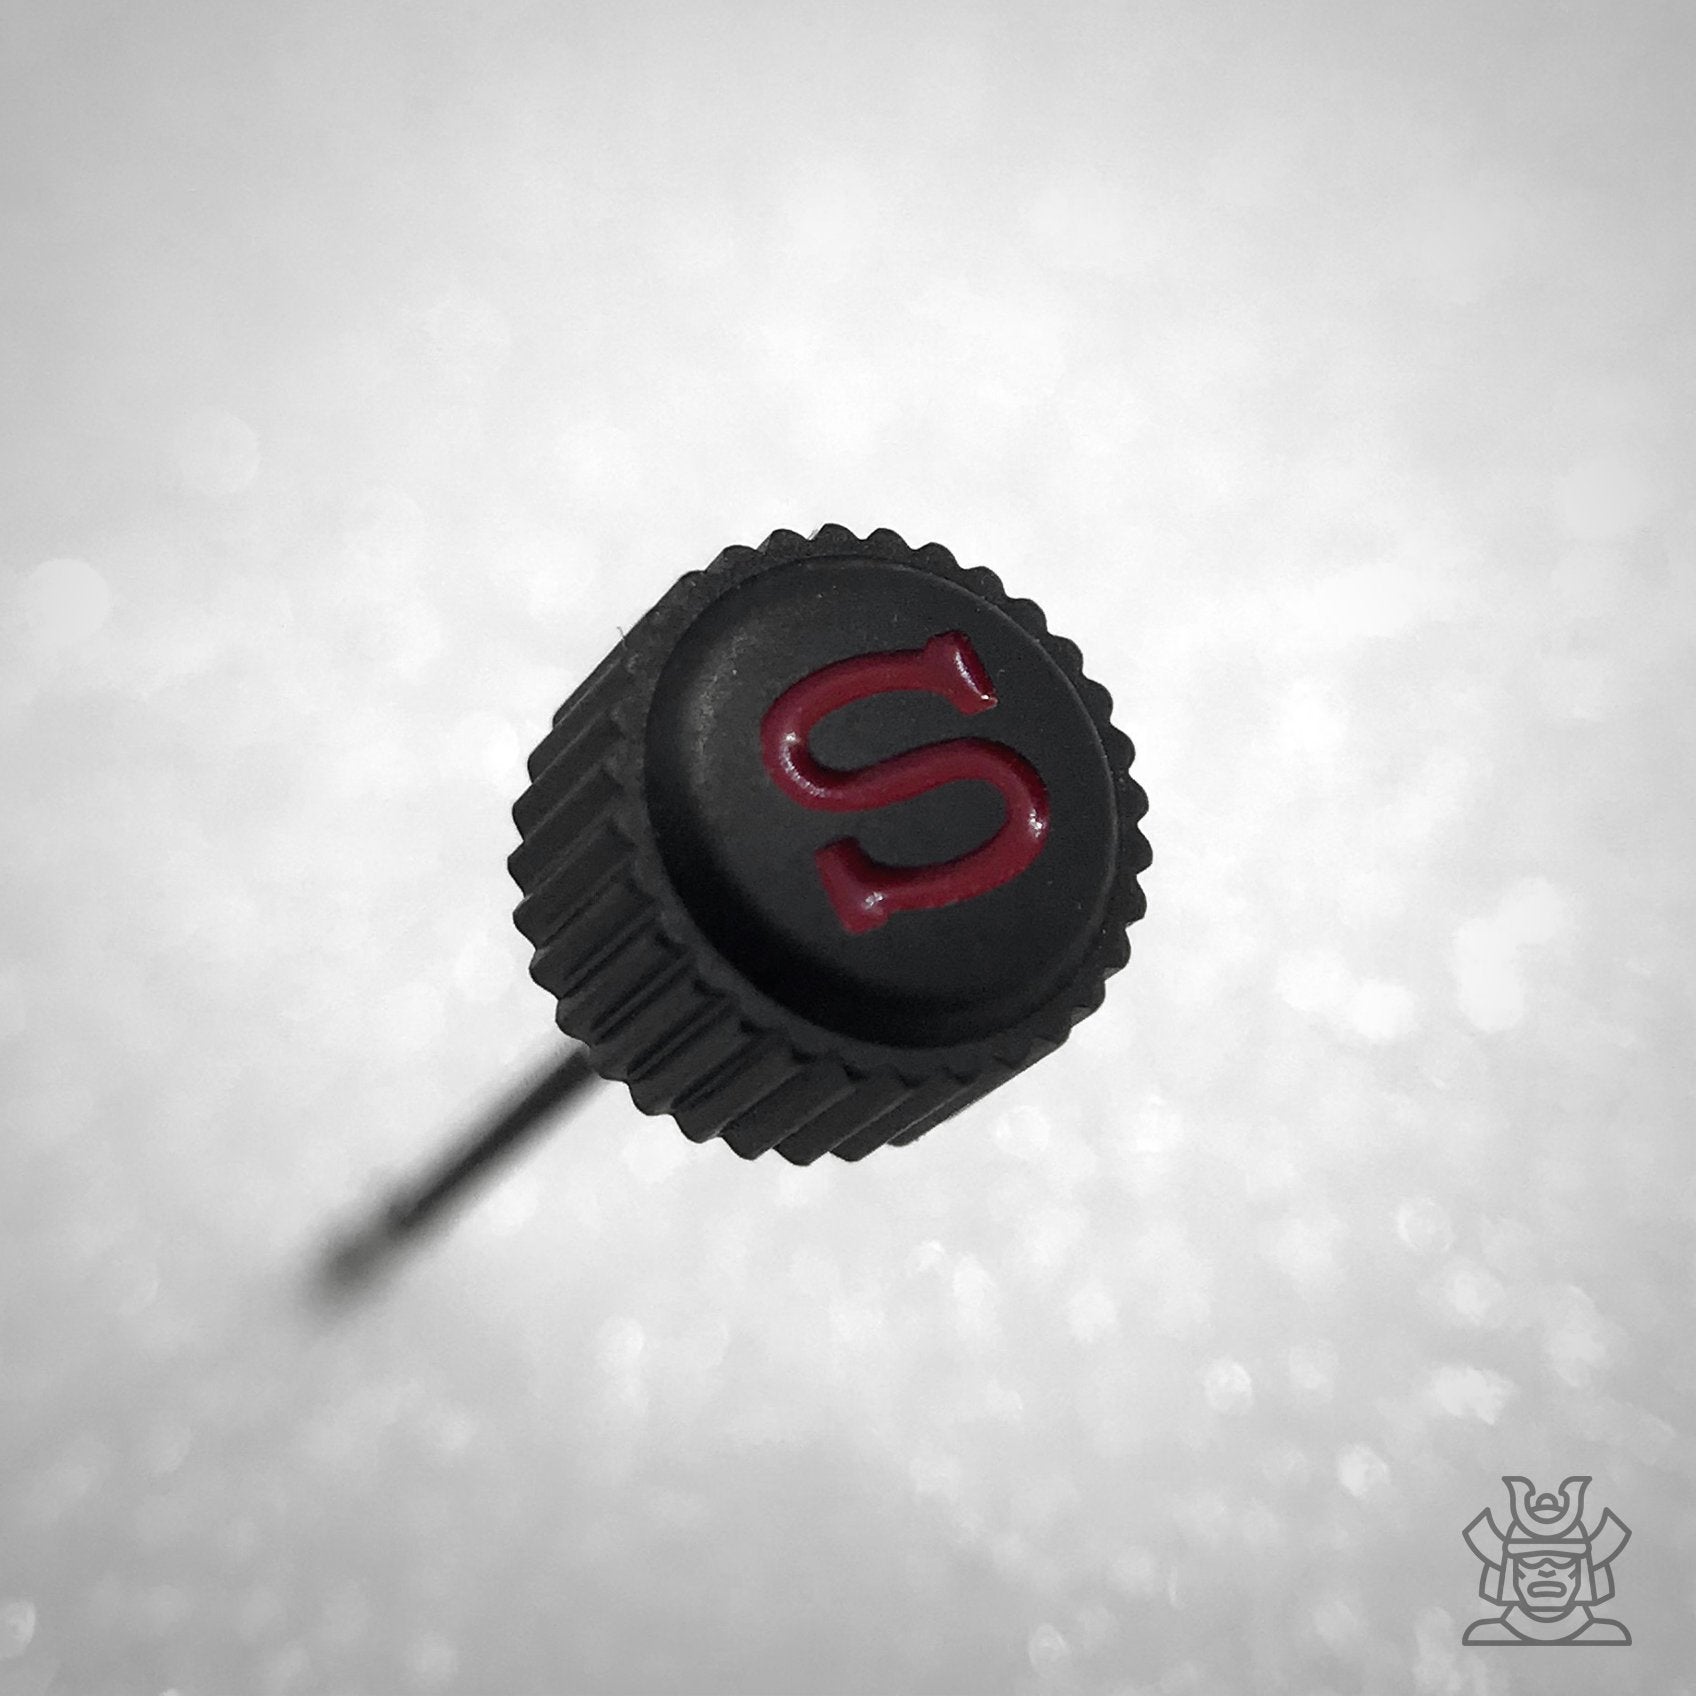 Crown - Samurai - Bead Blasted PVD Black - Red "S"